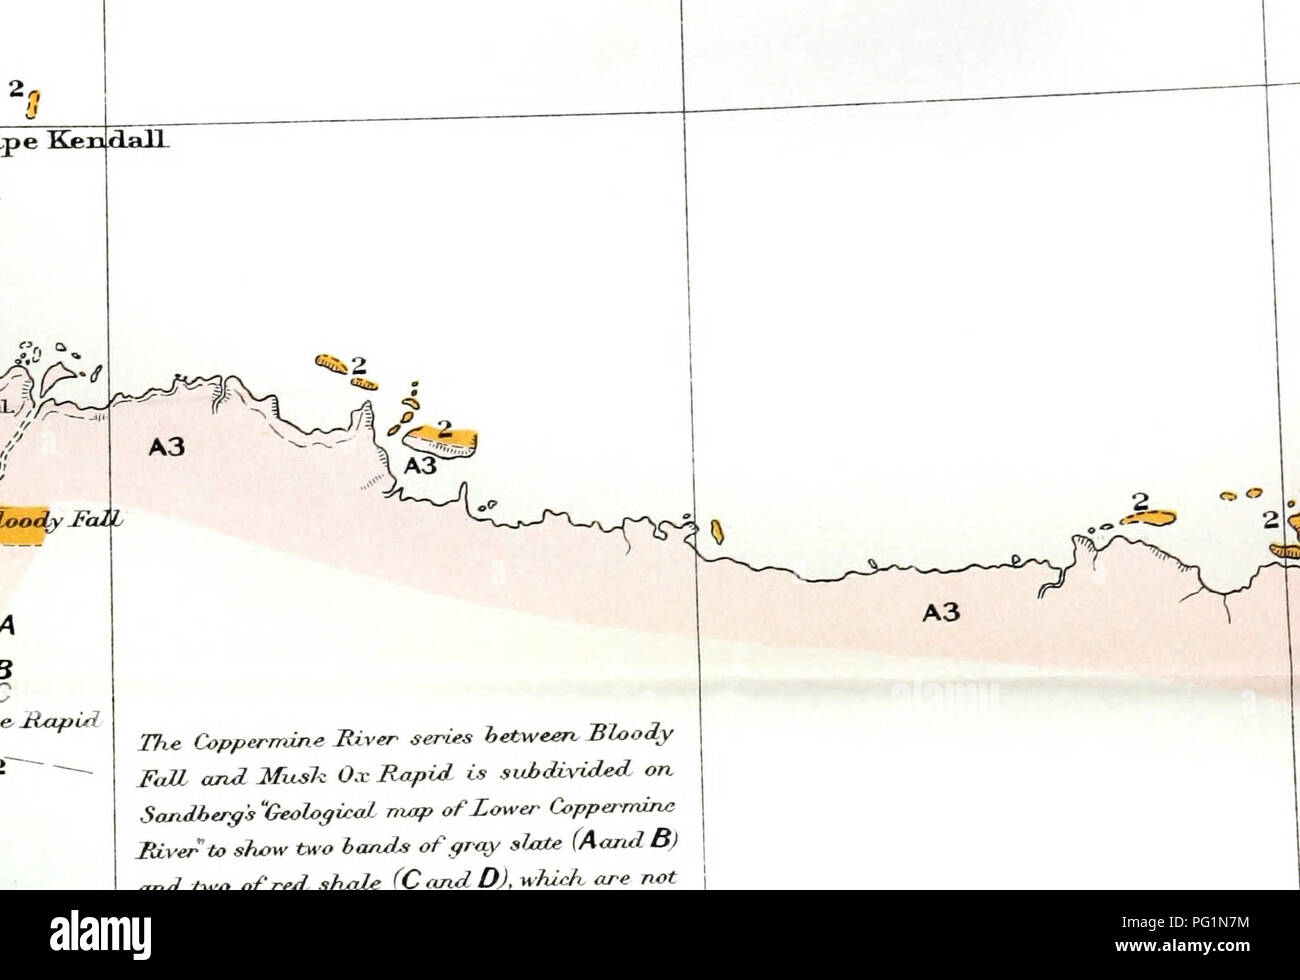 Report Of The Canadian Arctic Expedition 1913 18 Scientific Expeditions 64 15 E 6 Axcn E T 2 Quot 4x Fl U 7 Mirttiem Limit Of Fpr Uce Jfescape Jlapui A Hi